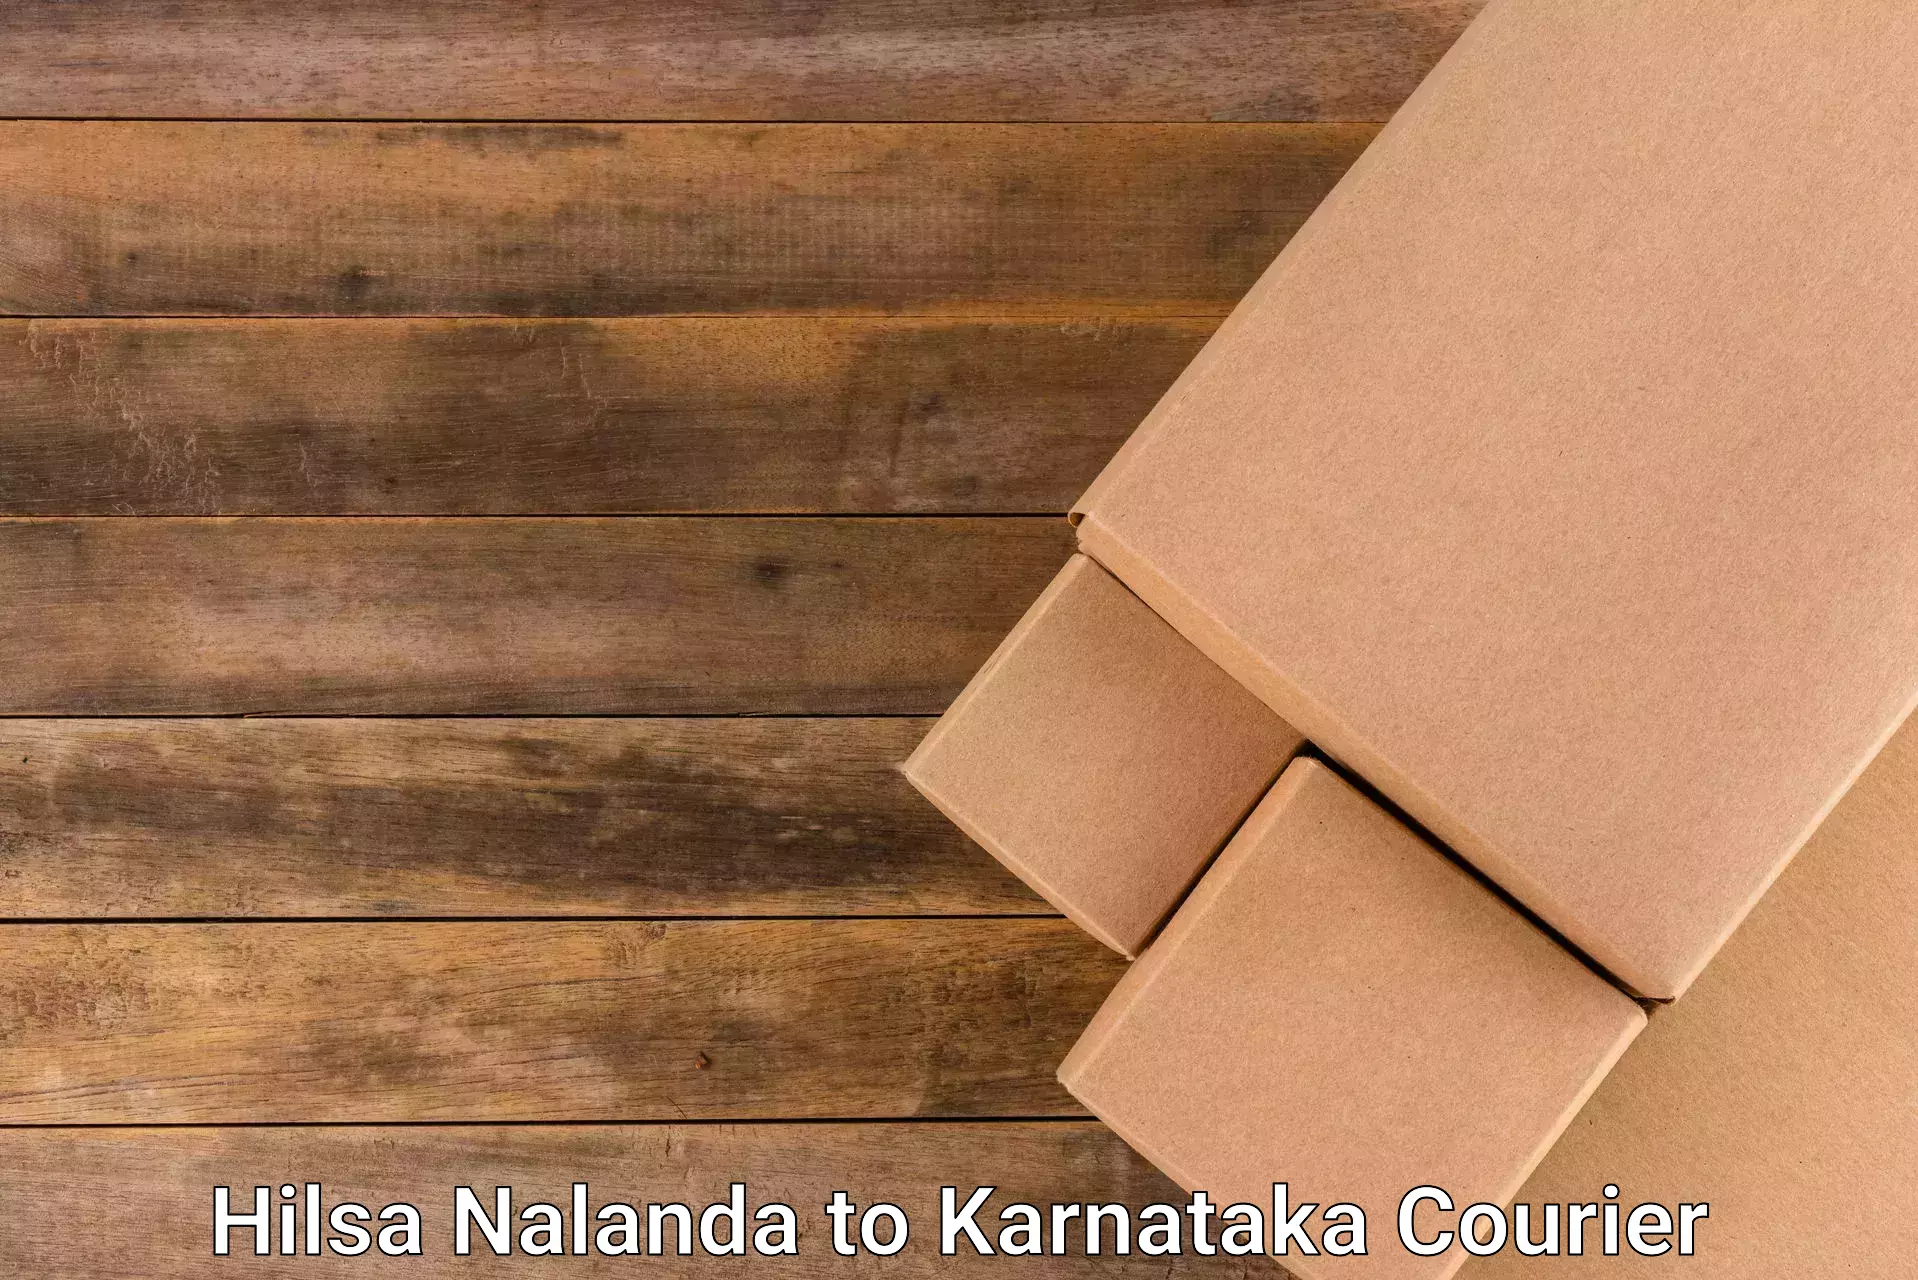 User-friendly delivery service Hilsa Nalanda to Karnataka